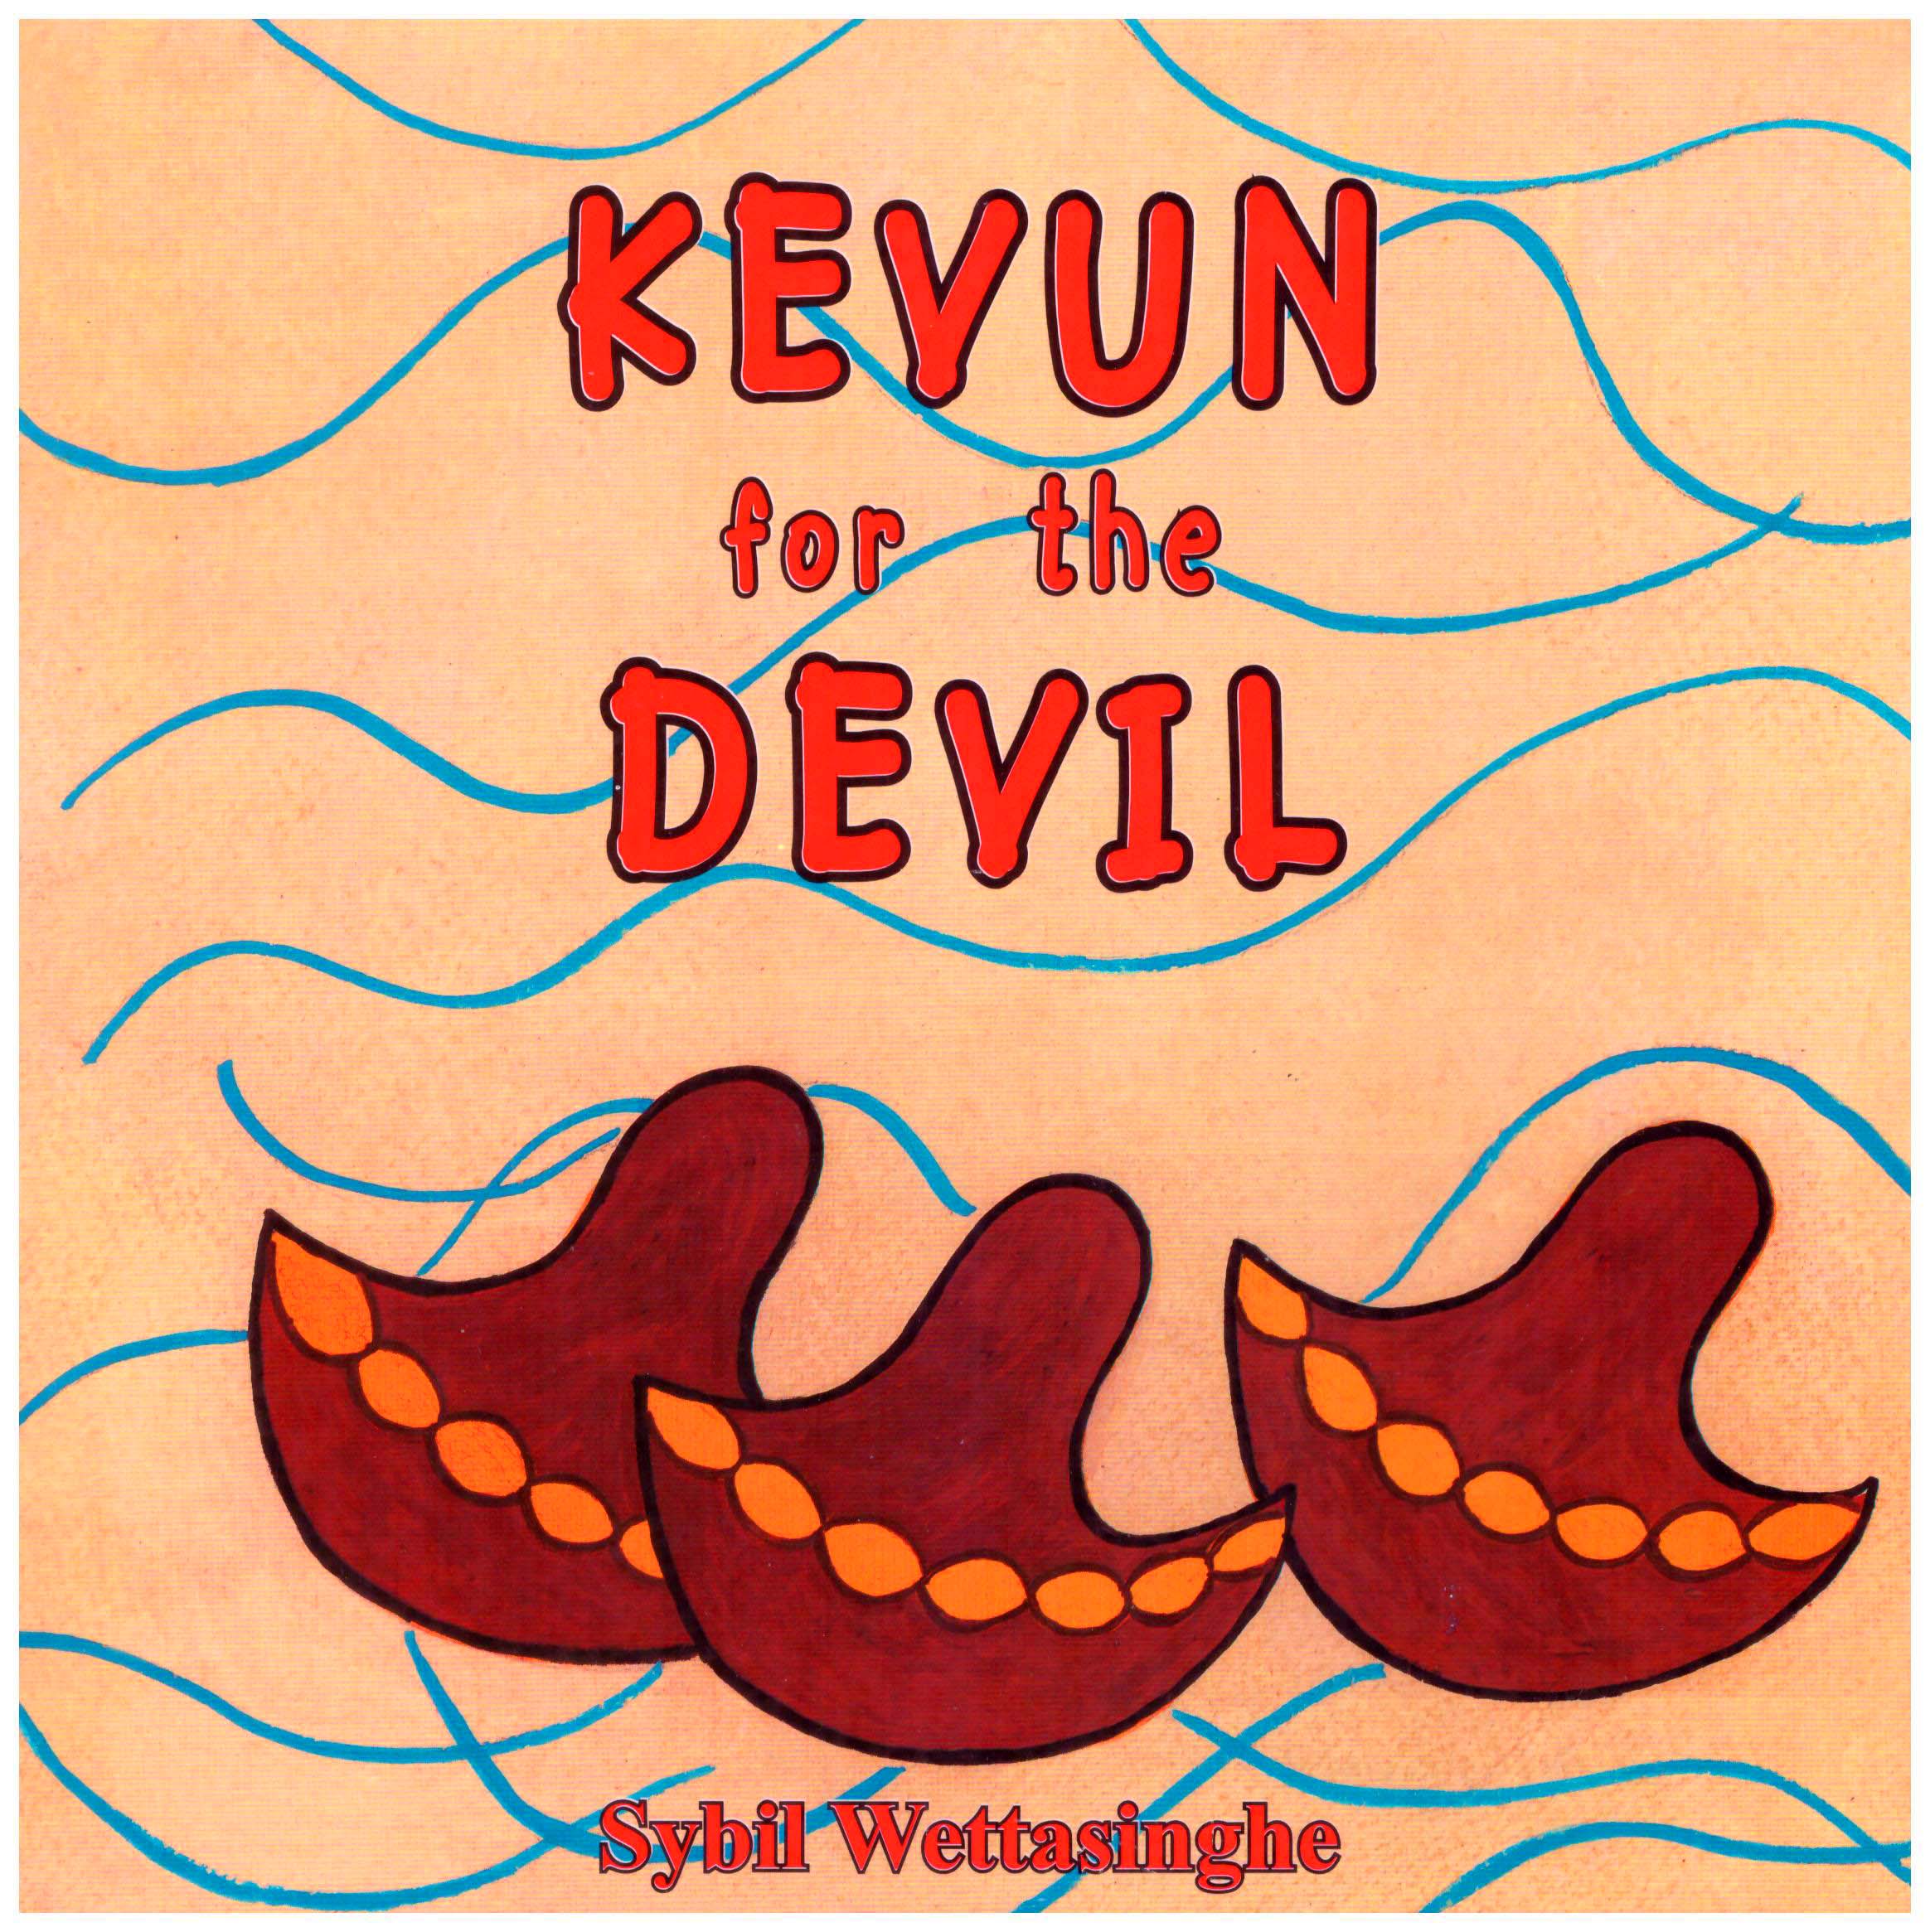 Kevun for the Devil